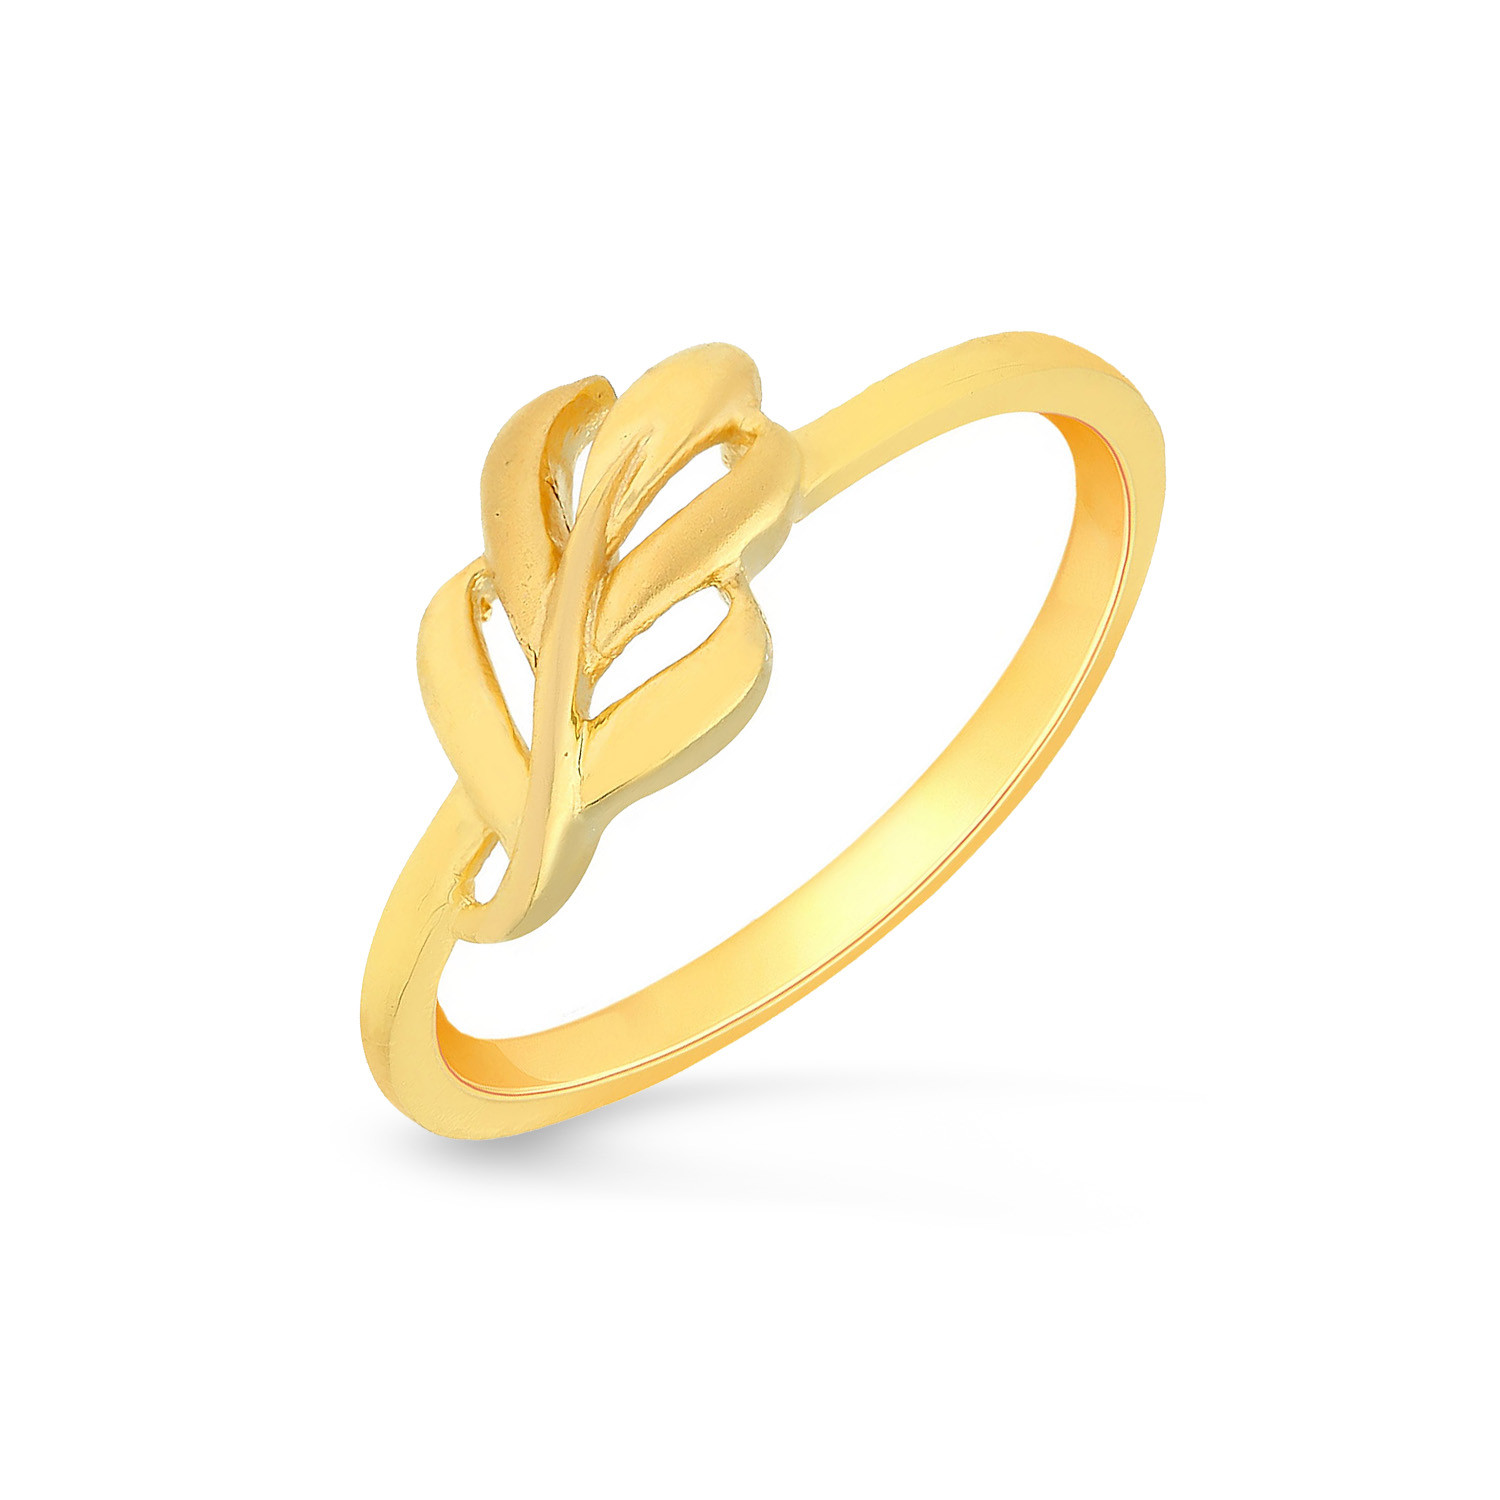 Malabar 22 KT Gold Studded Casual Ring FRGEDZRURGW702